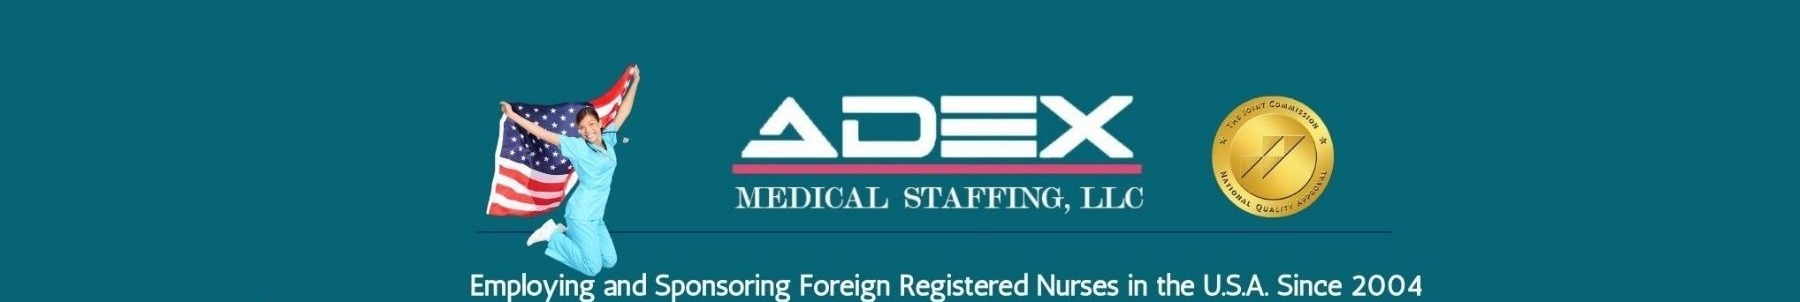 Adex Medical Staffing background